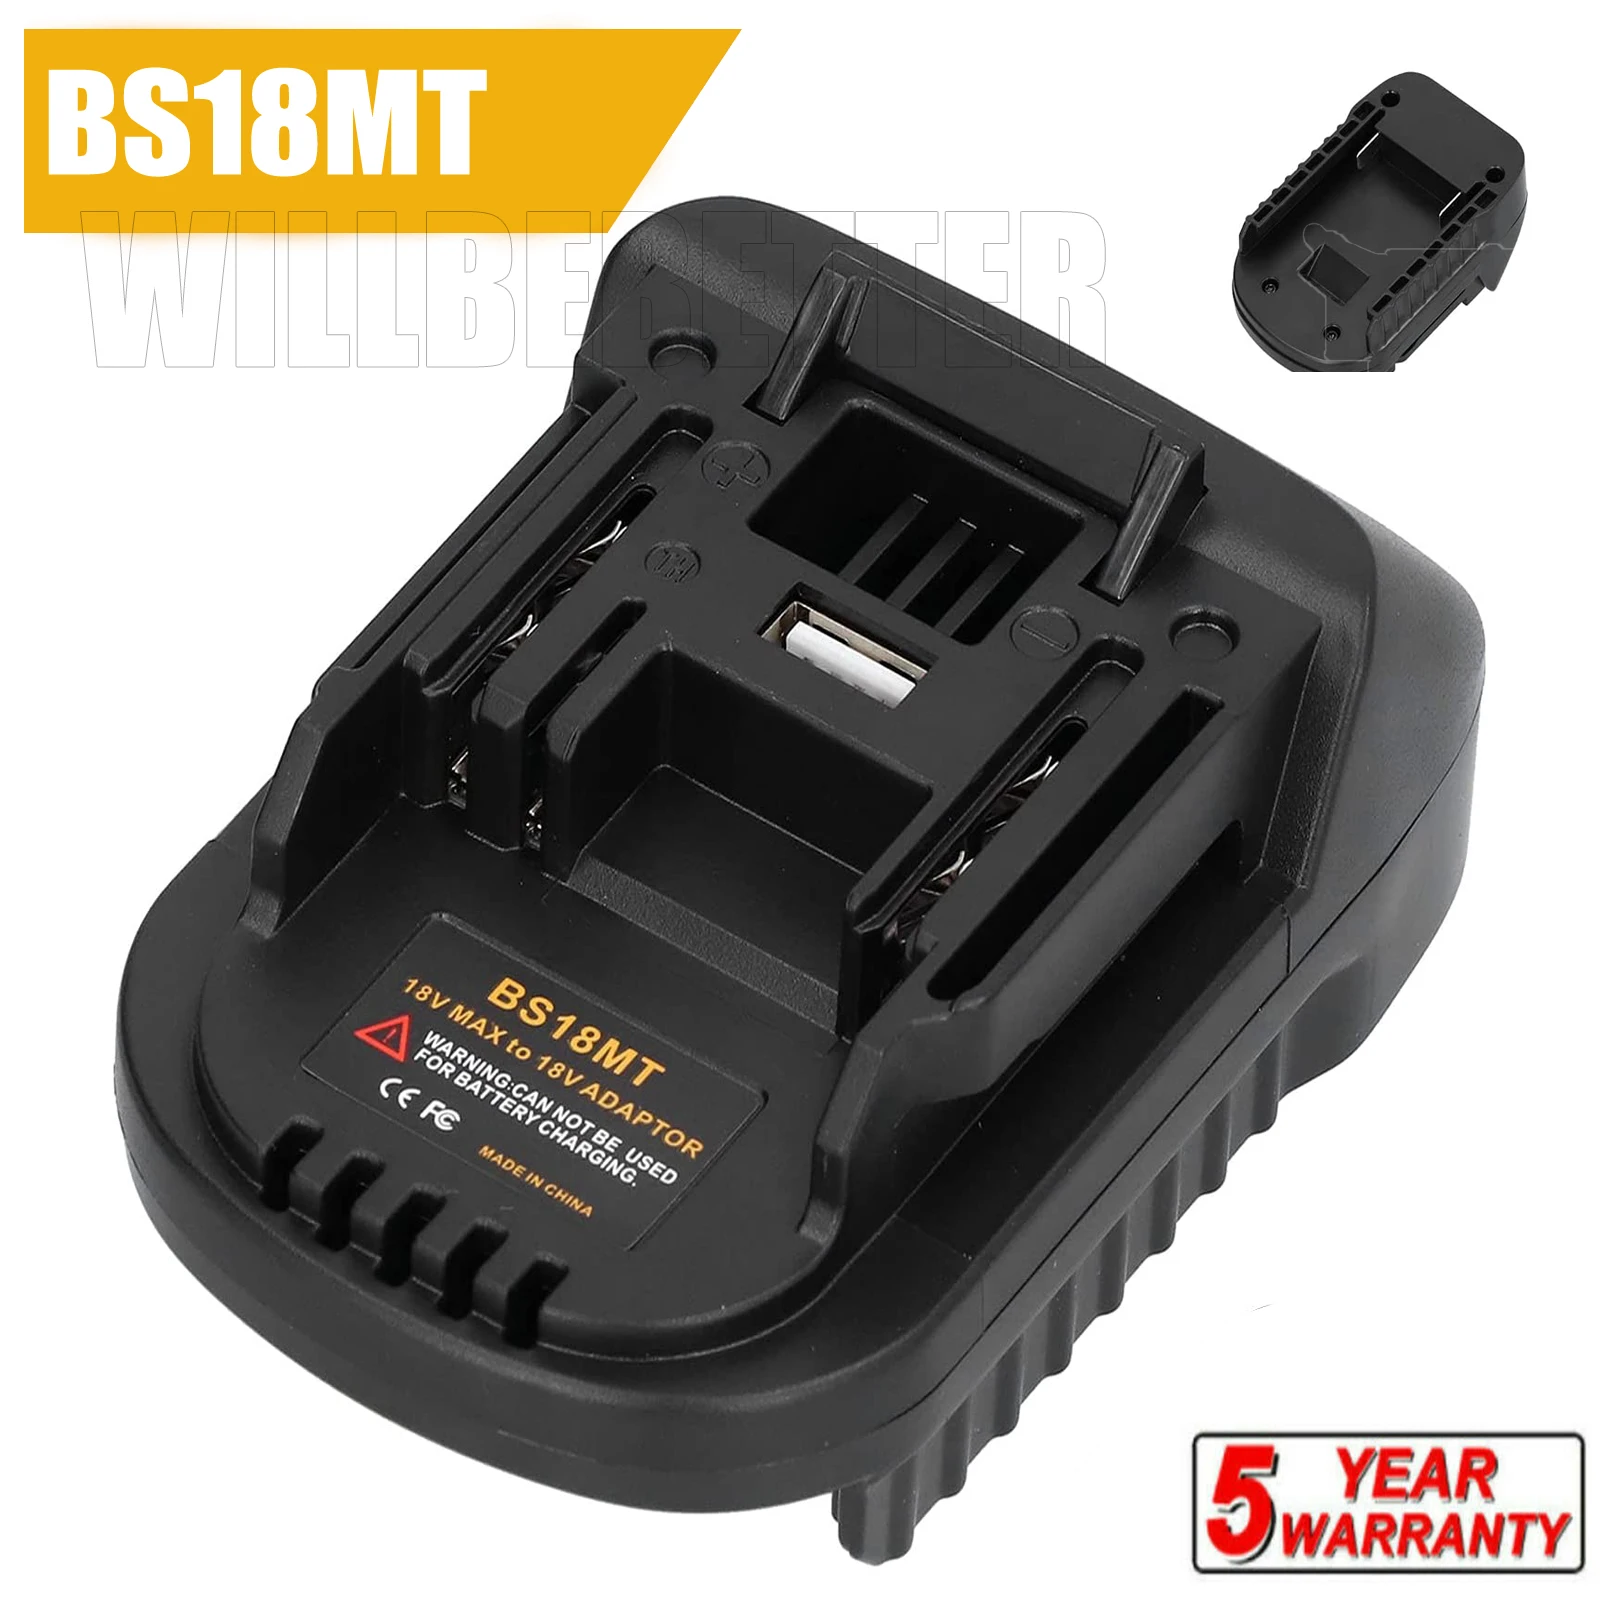 BS18MT Battery Adapter Converter USB For Bosch 18V BAT619G/620 Batteries Convert To For Makita 18V BL 1860 Lithium Battery